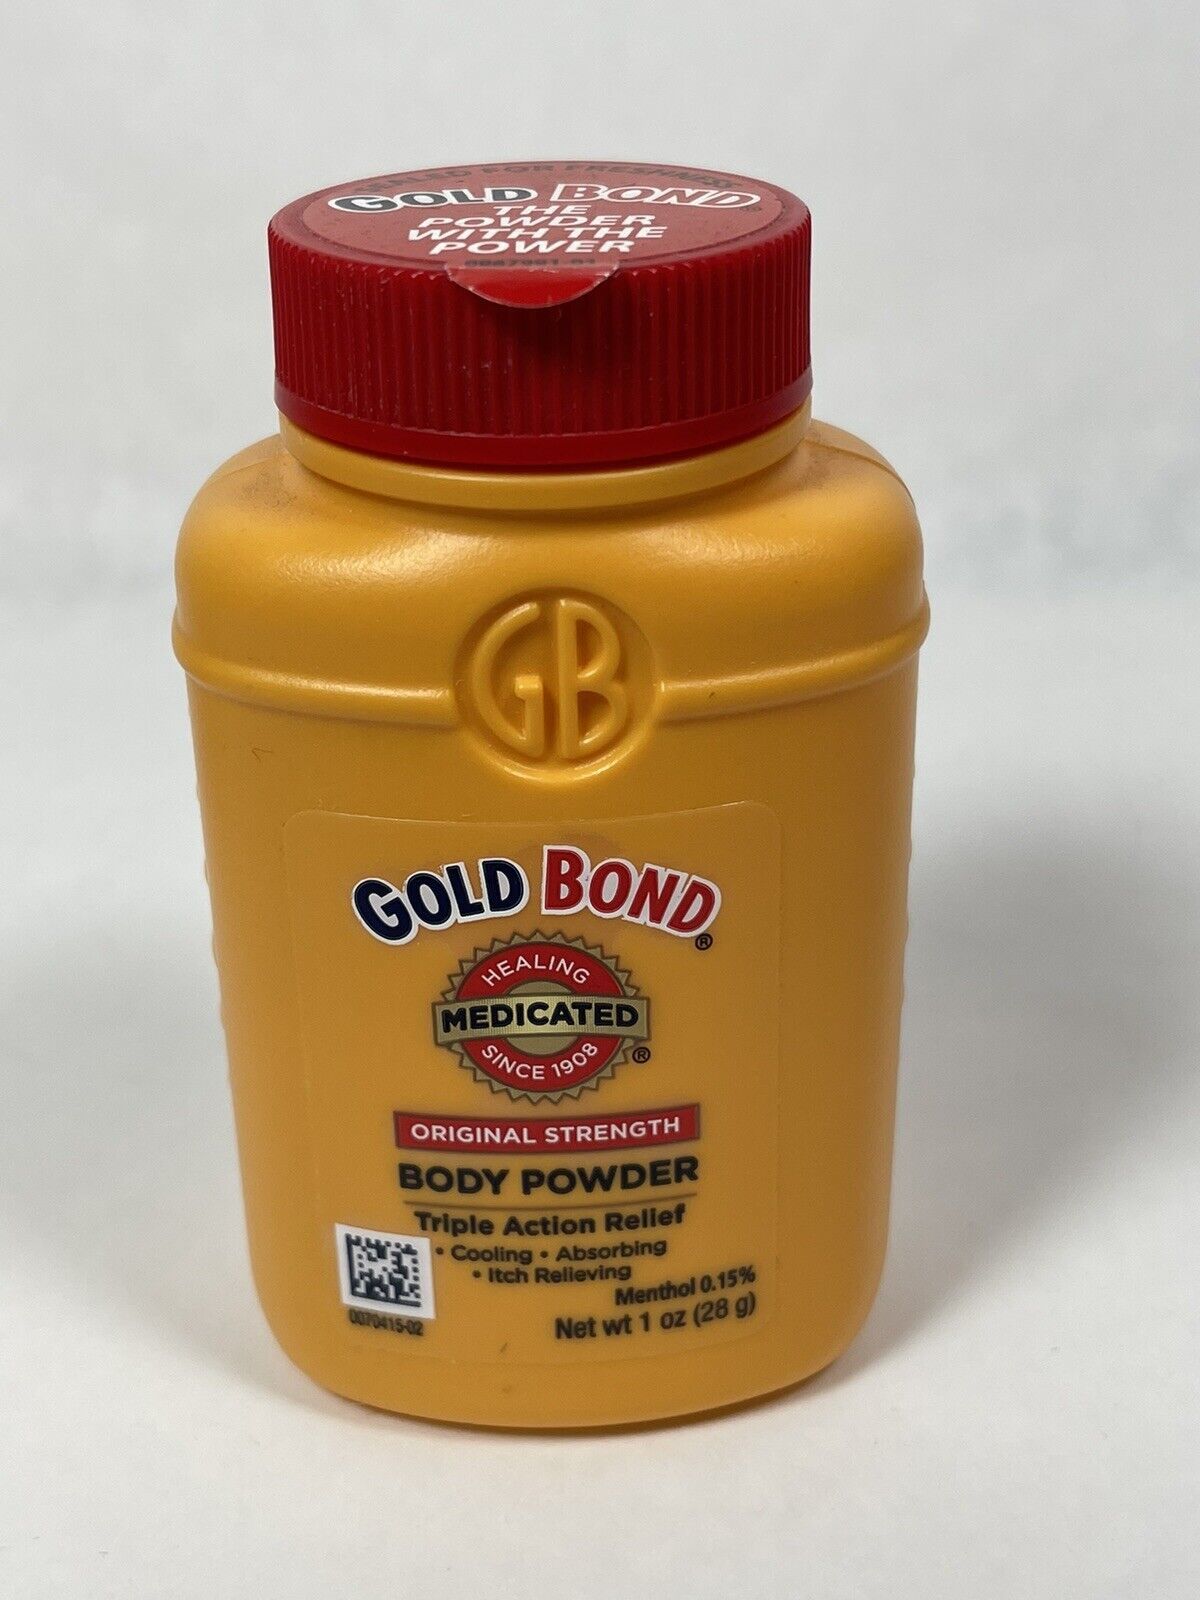 Gold Bond Body Powder 1 oz Travel Size Original Strength Talc Menthol Mini New - $9.00